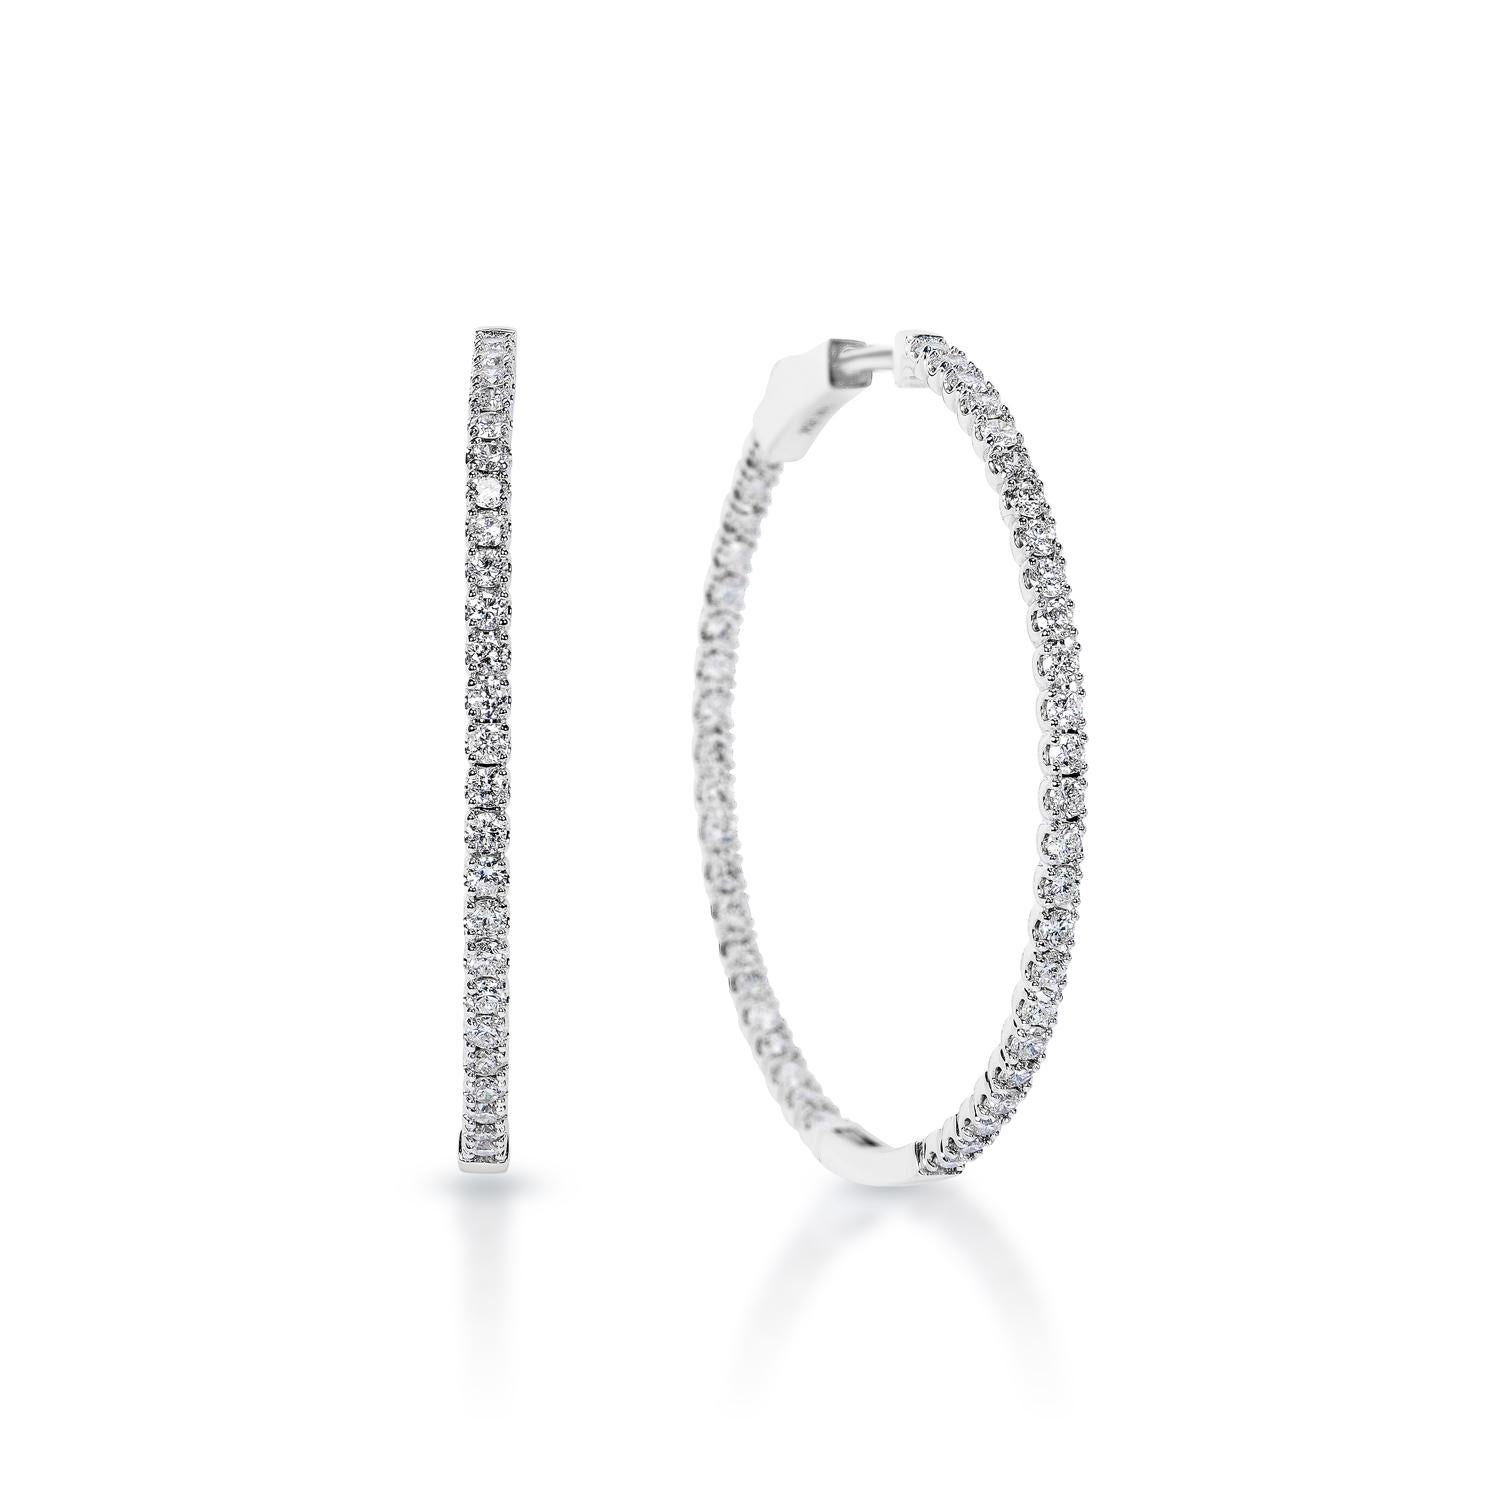 Diamond Hoop Earrings:

Carat Weight: 4.10 Carats
Shape: Round Brilliant Cut
Metal: 14 Karat White Gold
Style: Hoop Earrings